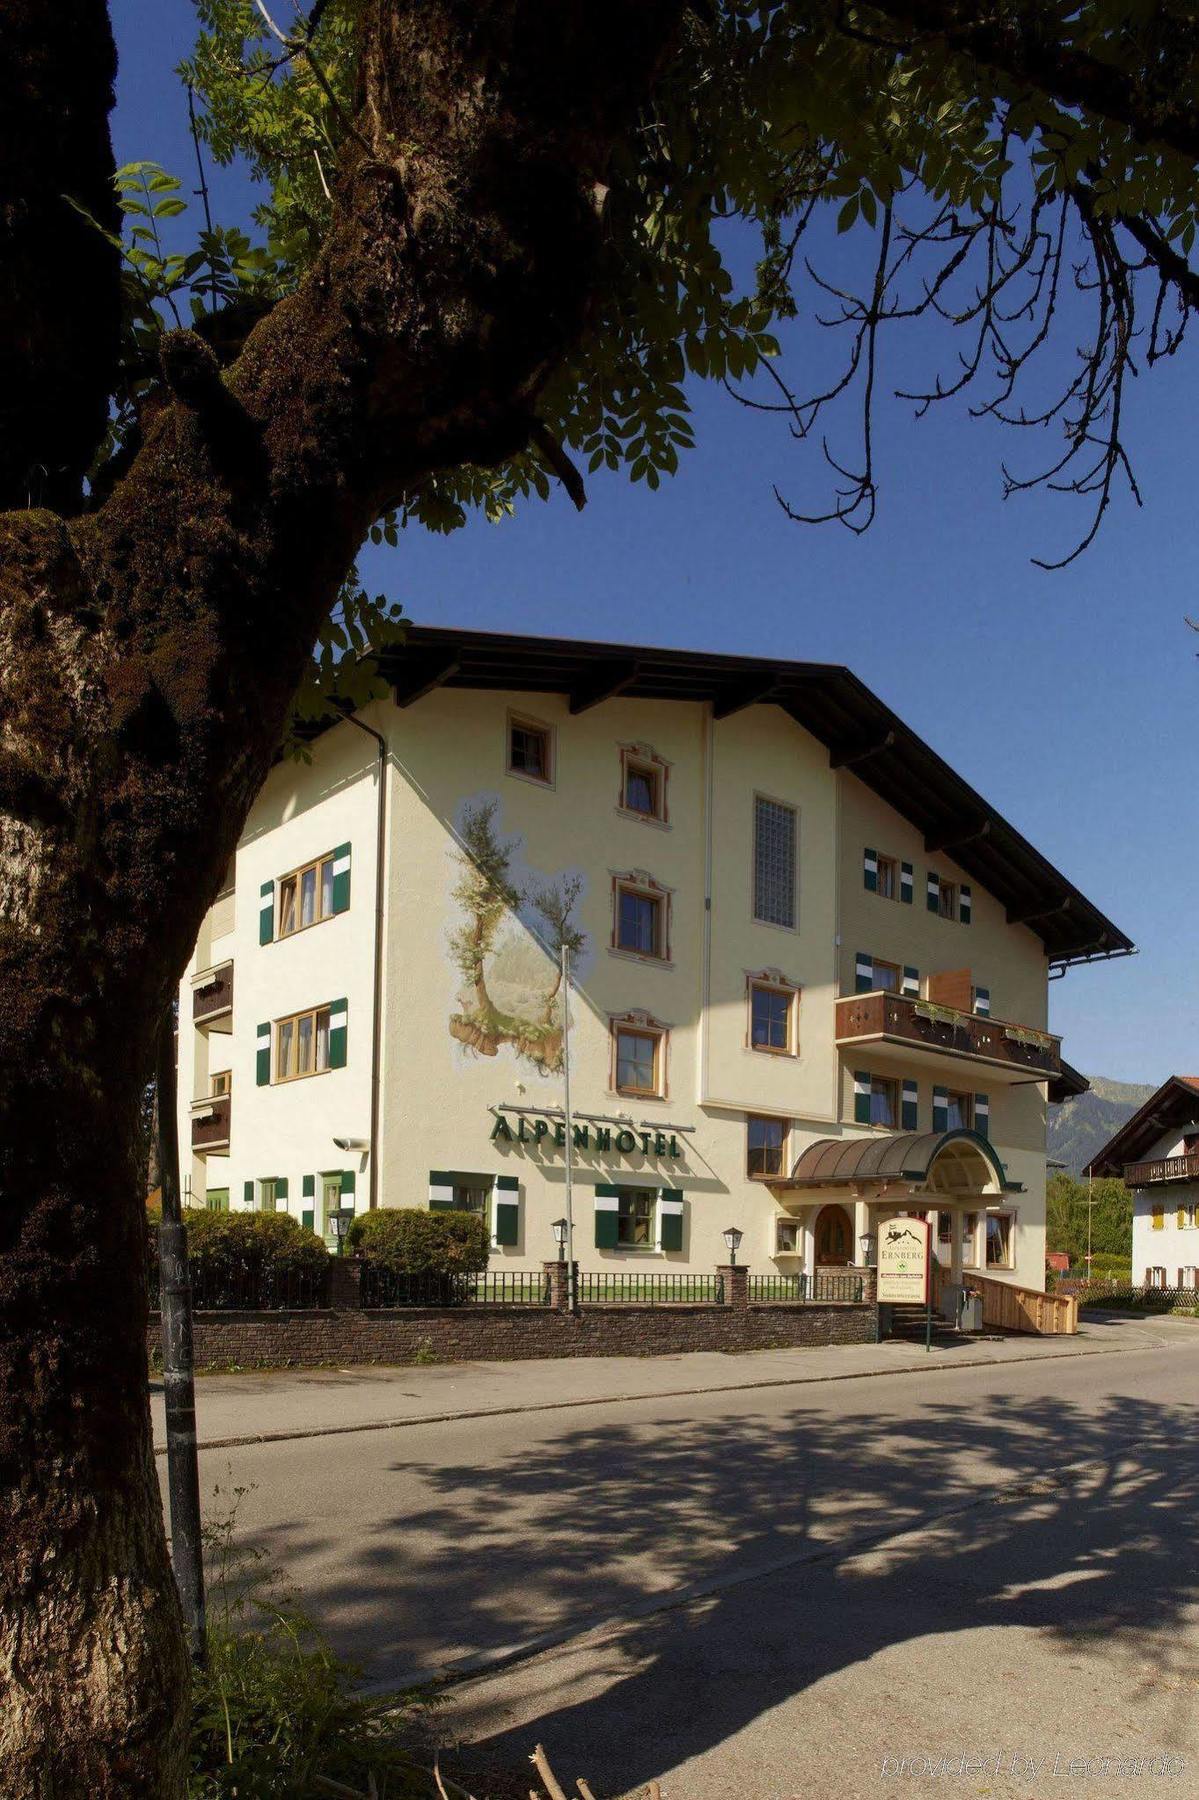 Alpenhotel Ernberg รอยท์เทอ ภายนอก รูปภาพ